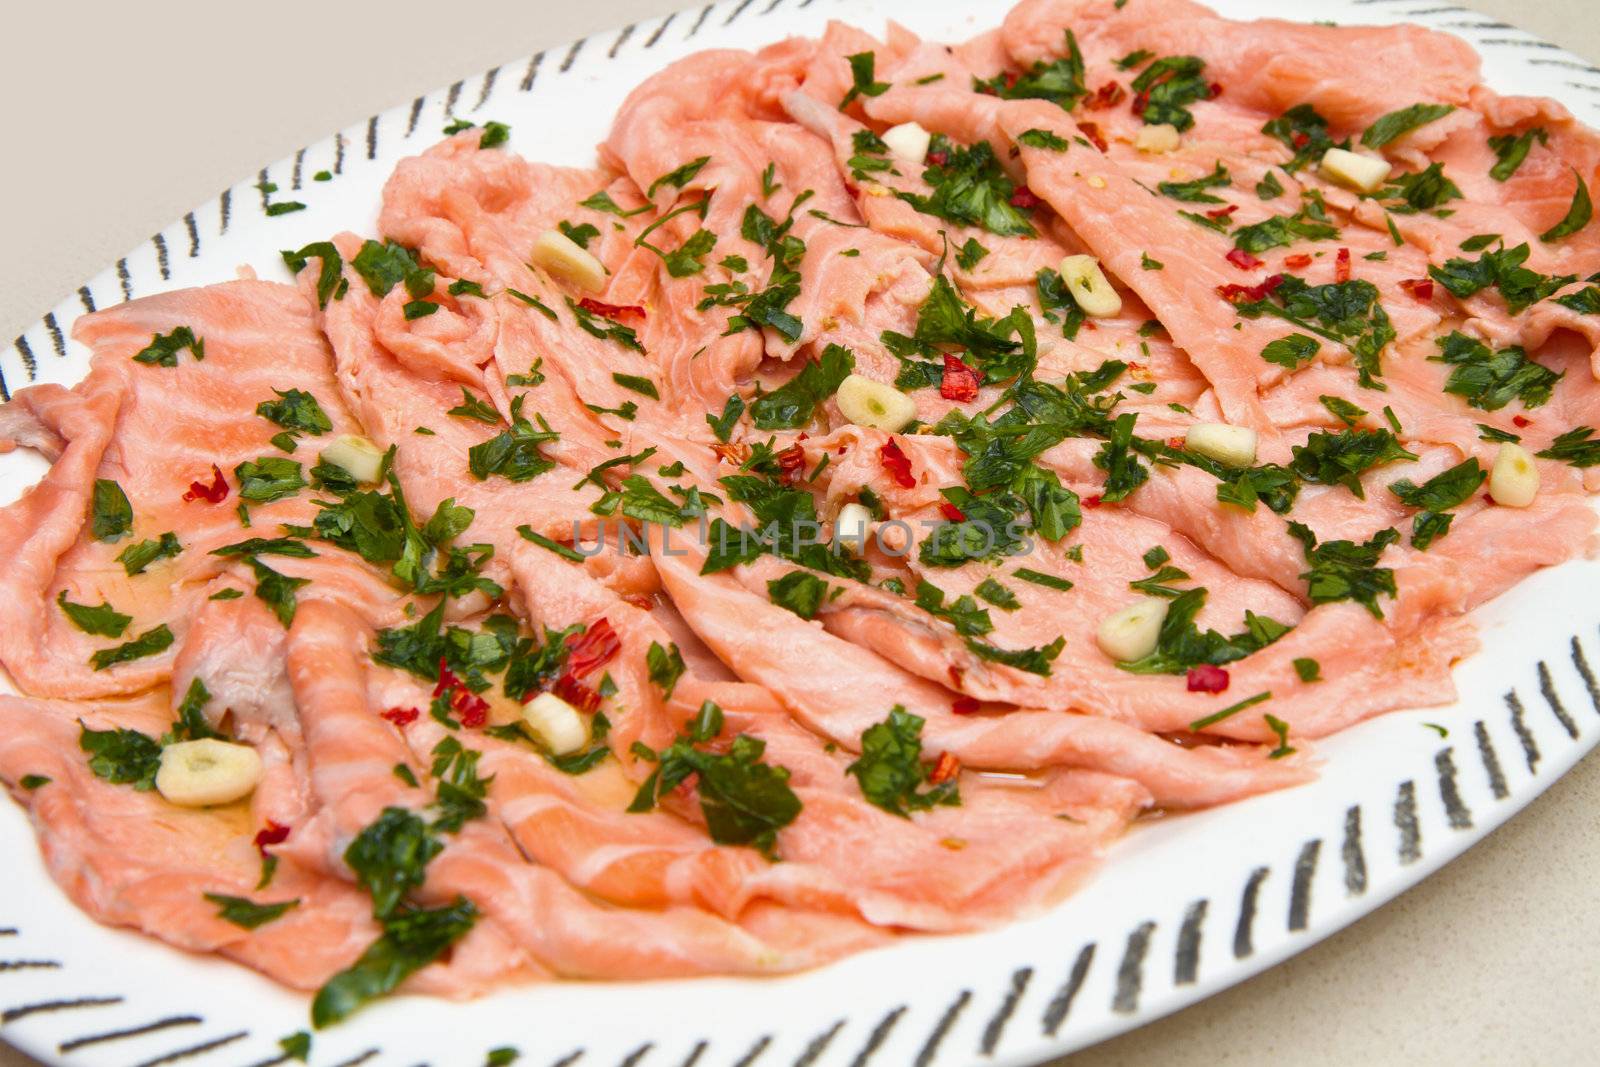 dish with marinated salmon